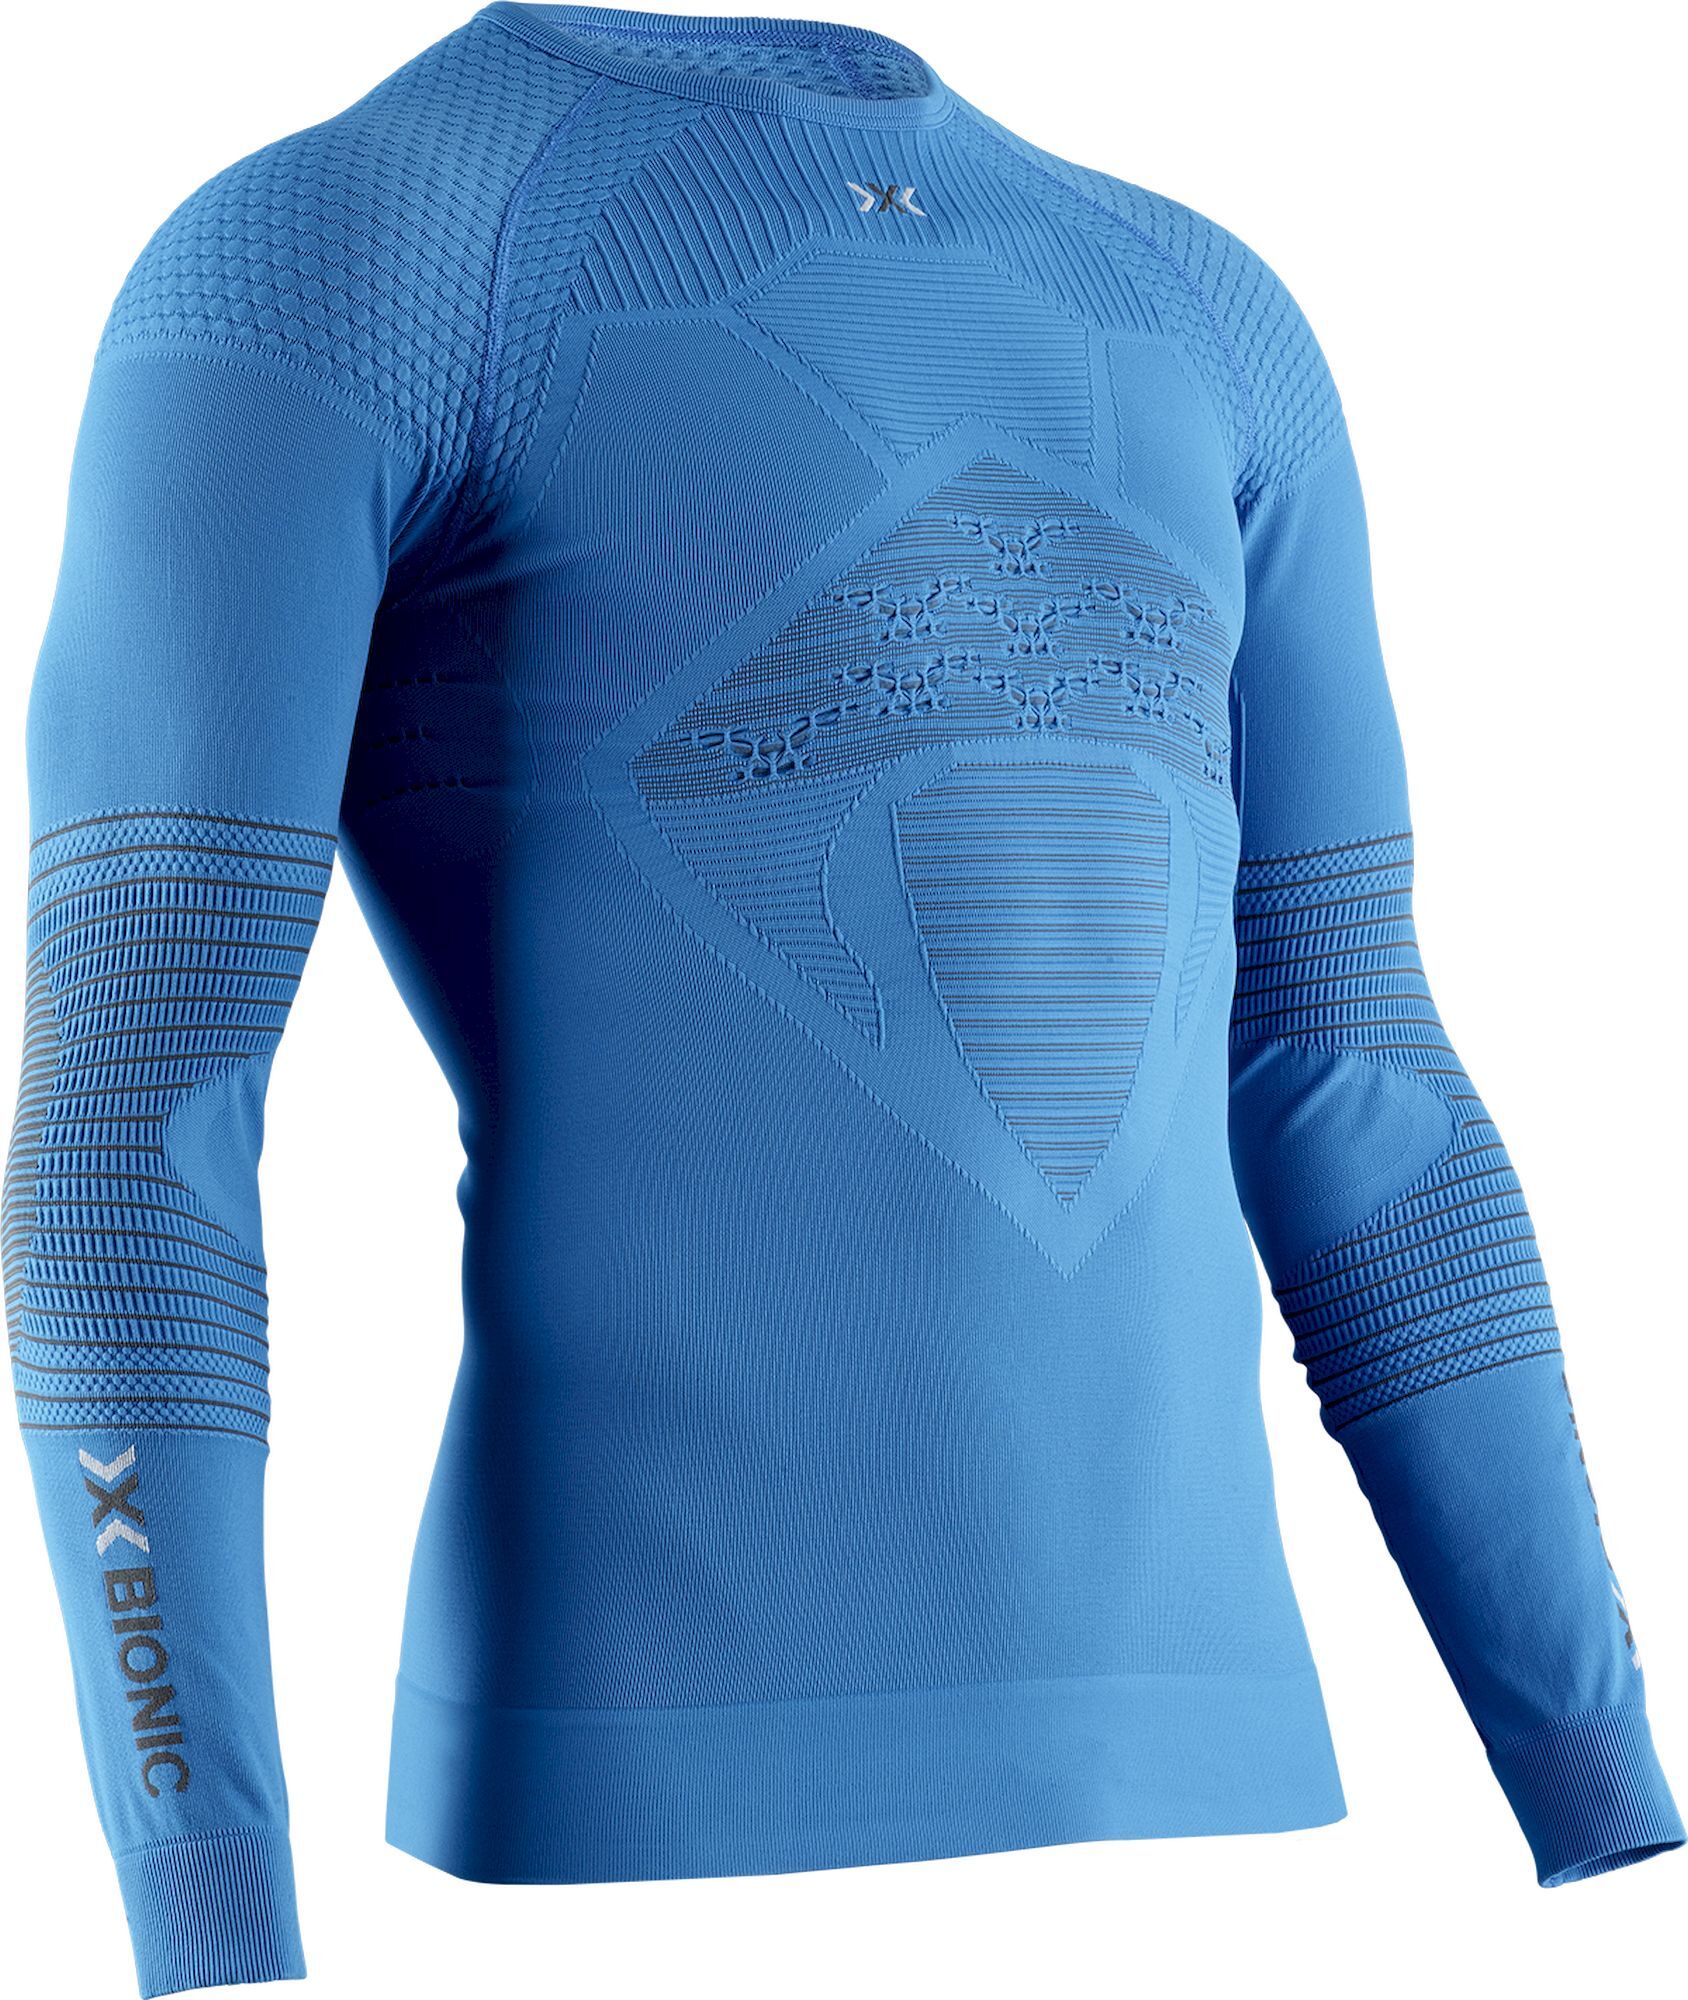 X-Bionic Energizer 4.0 Shirt Long Sleeve - Syntetisk undertøj - Herrer